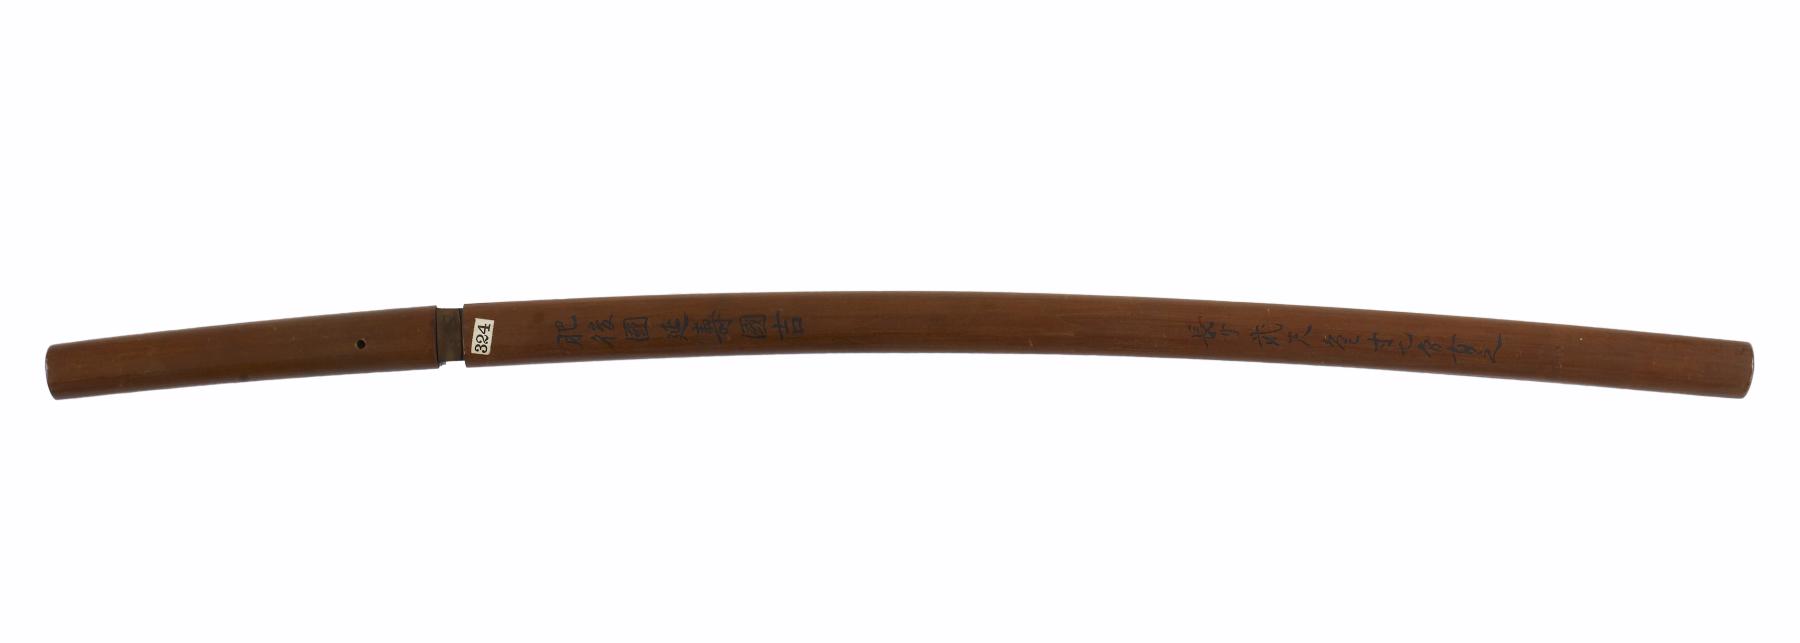 Image for Unmounted long sword (katana blade)